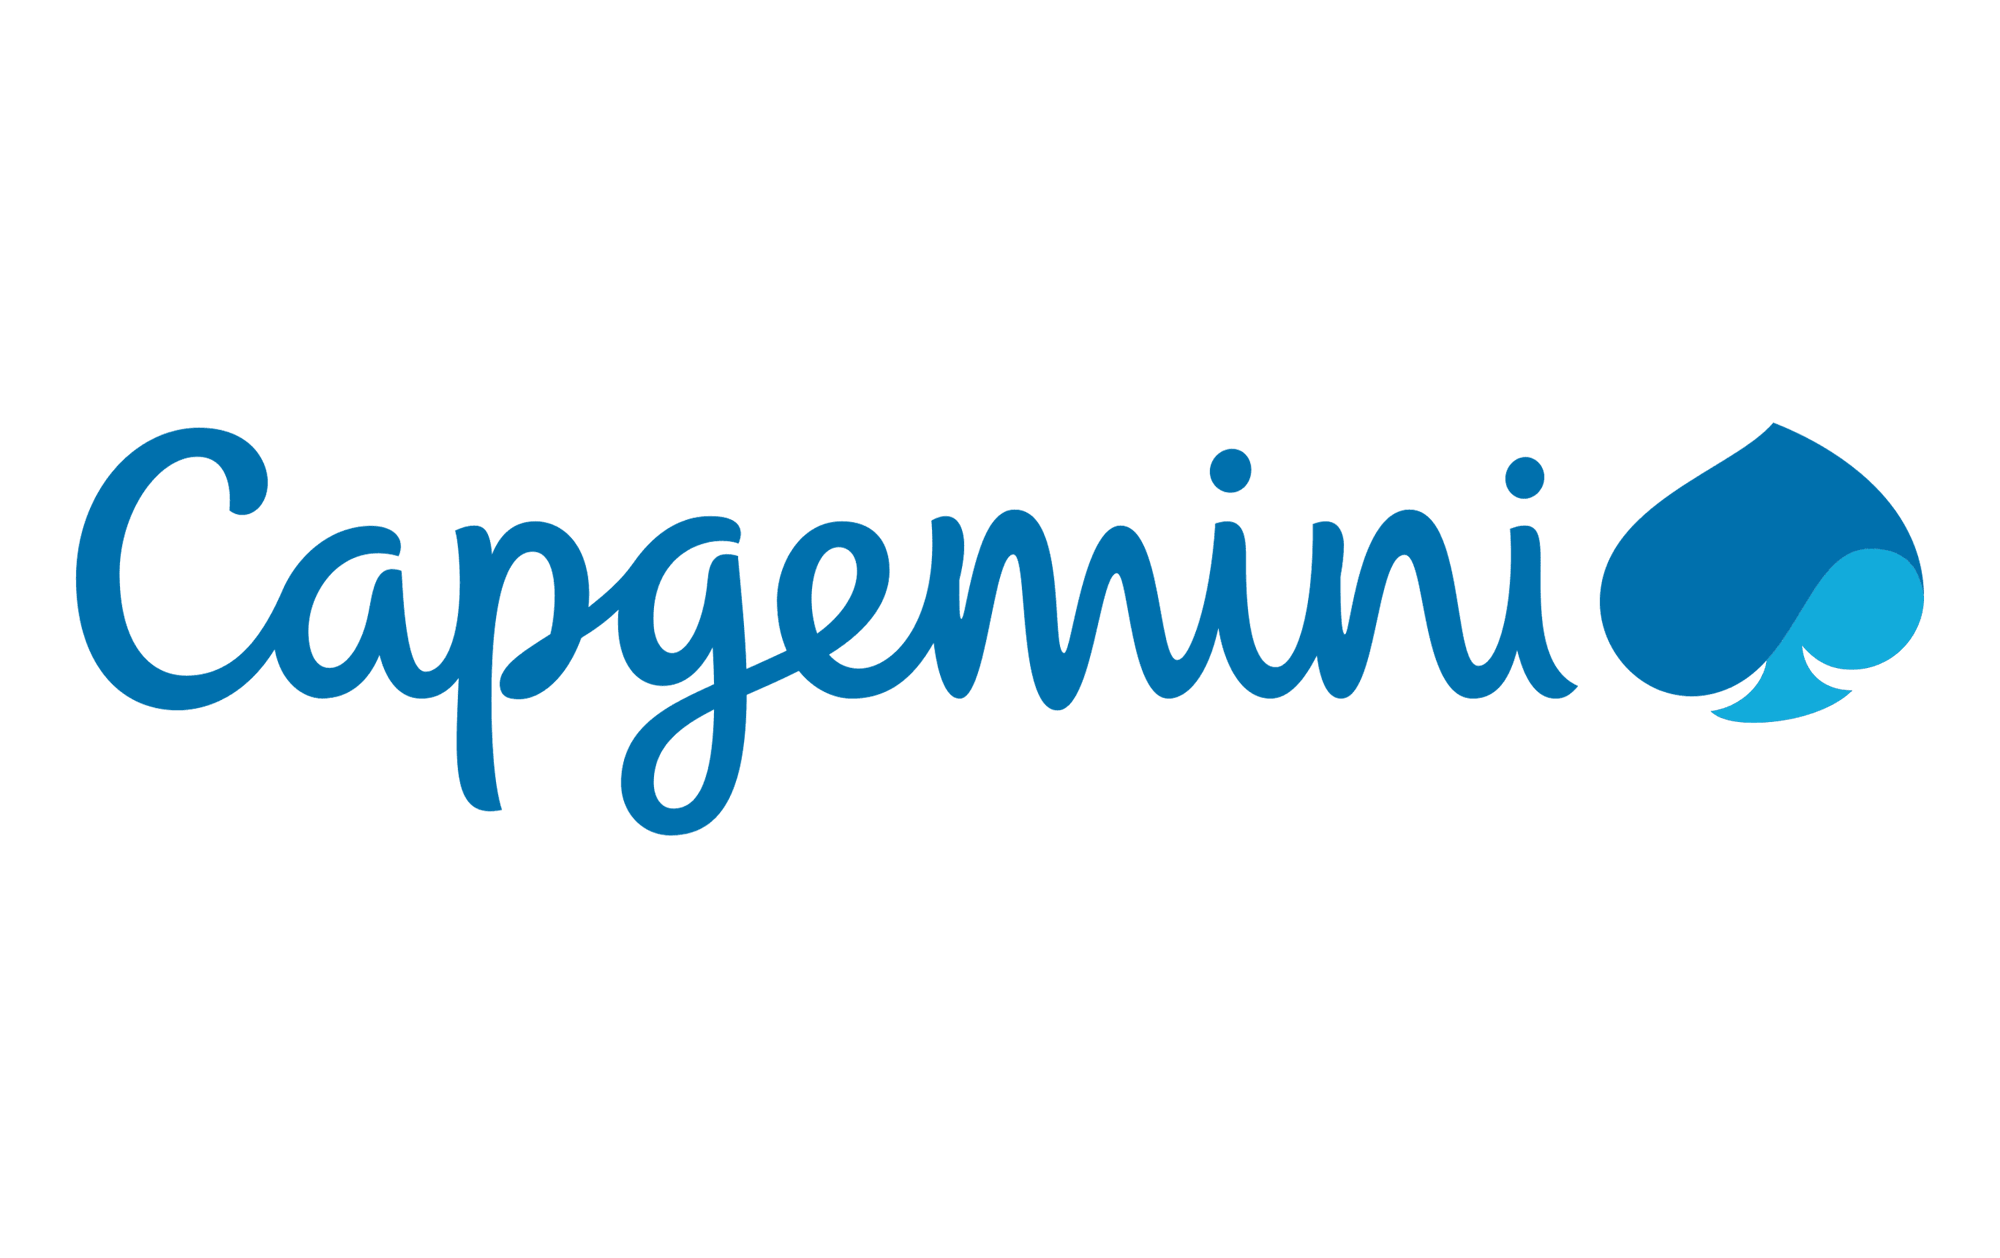 Capgemini-Logo-3